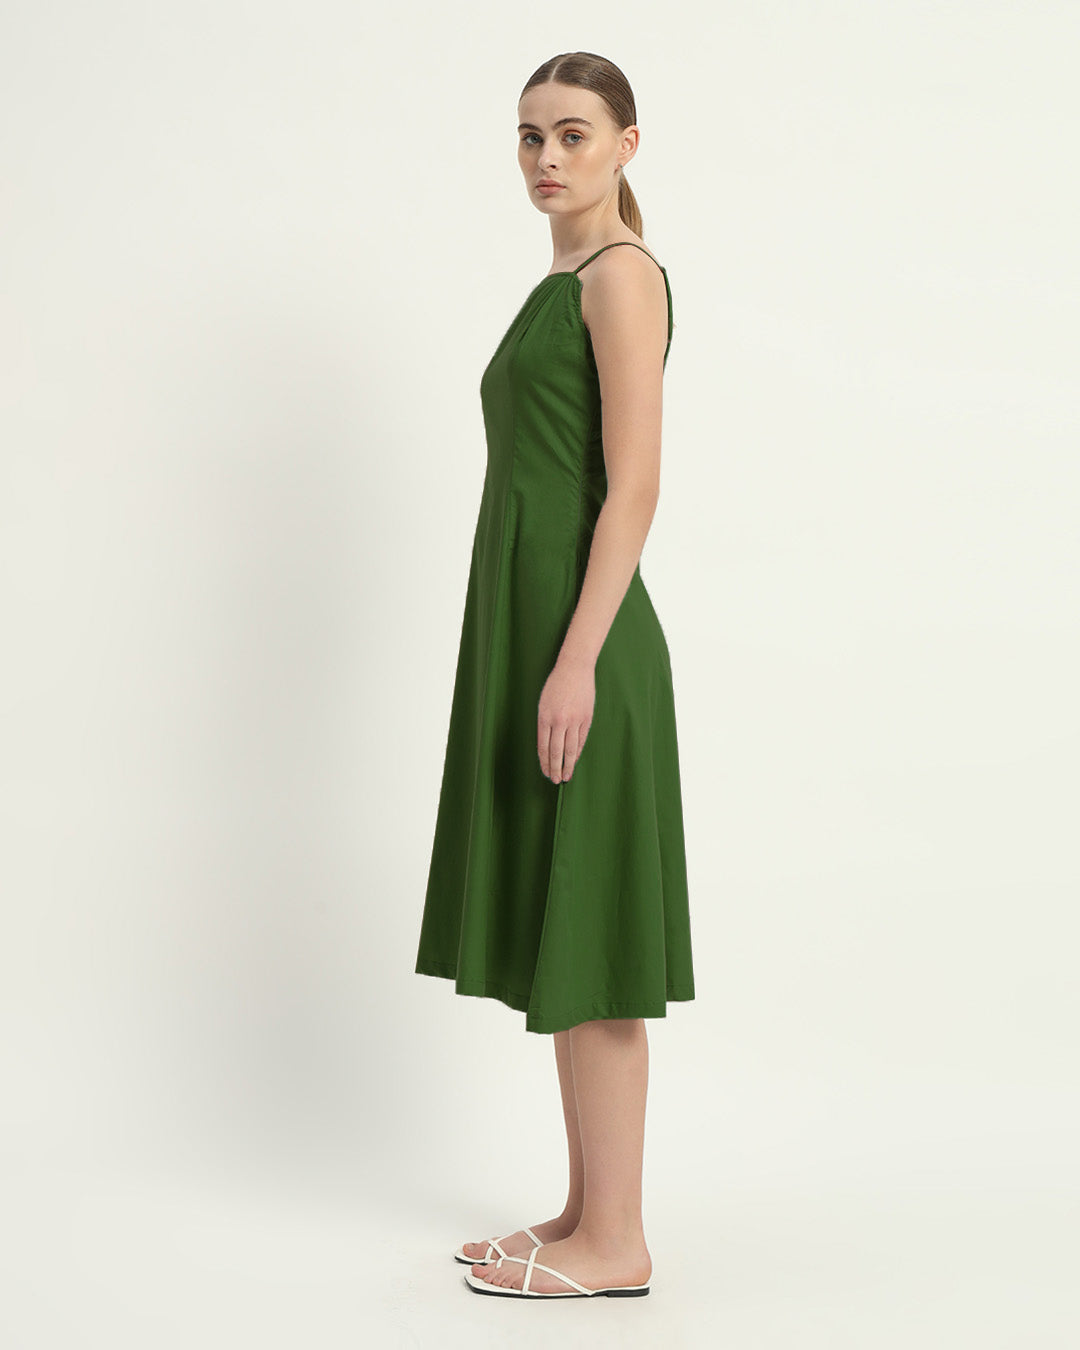 The Emerald Valatie Cotton Dress